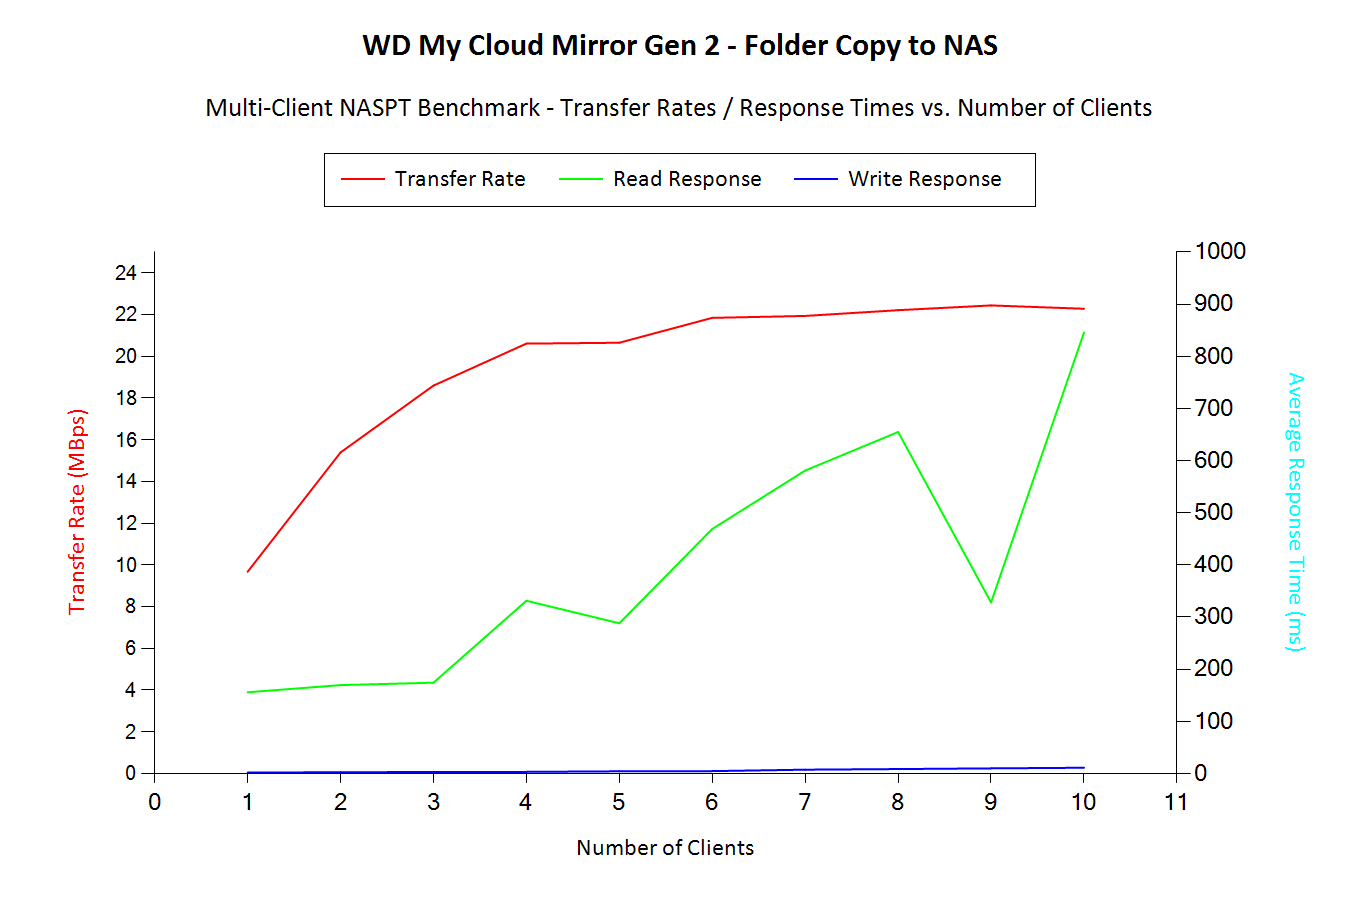 Folder Copy to NAS - Multi-Client Benchmark